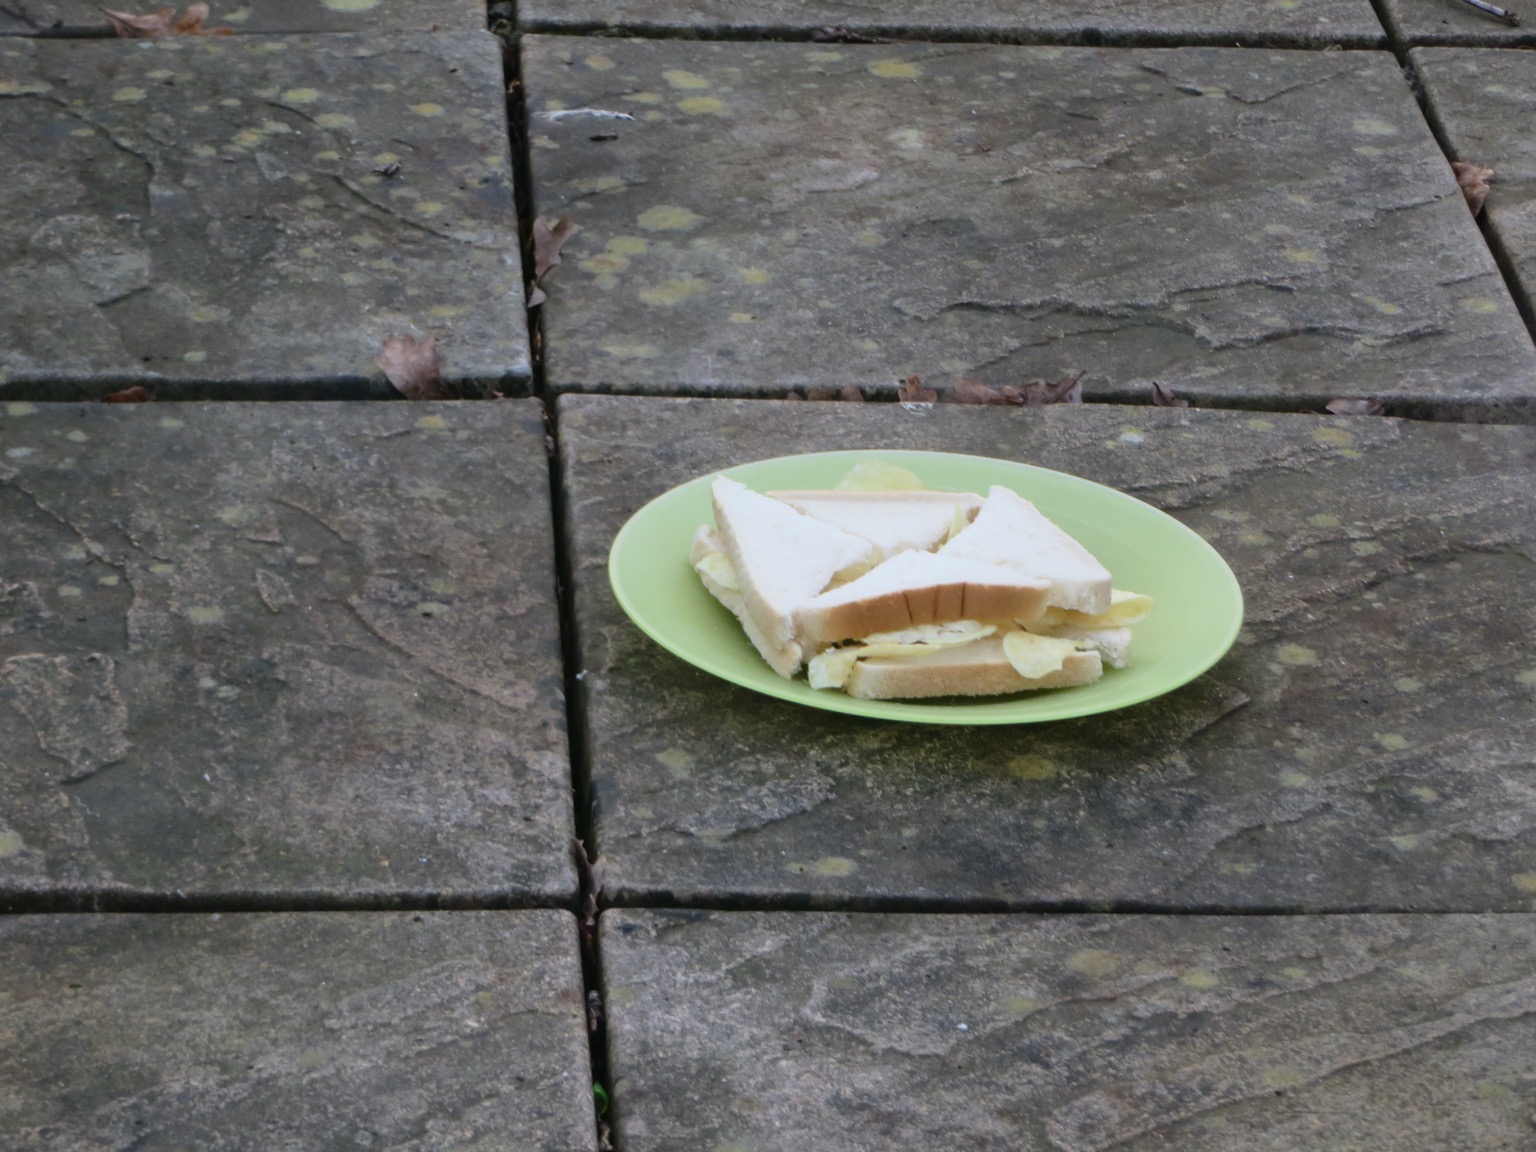 White crisp sandwich on a plate on paving slabs